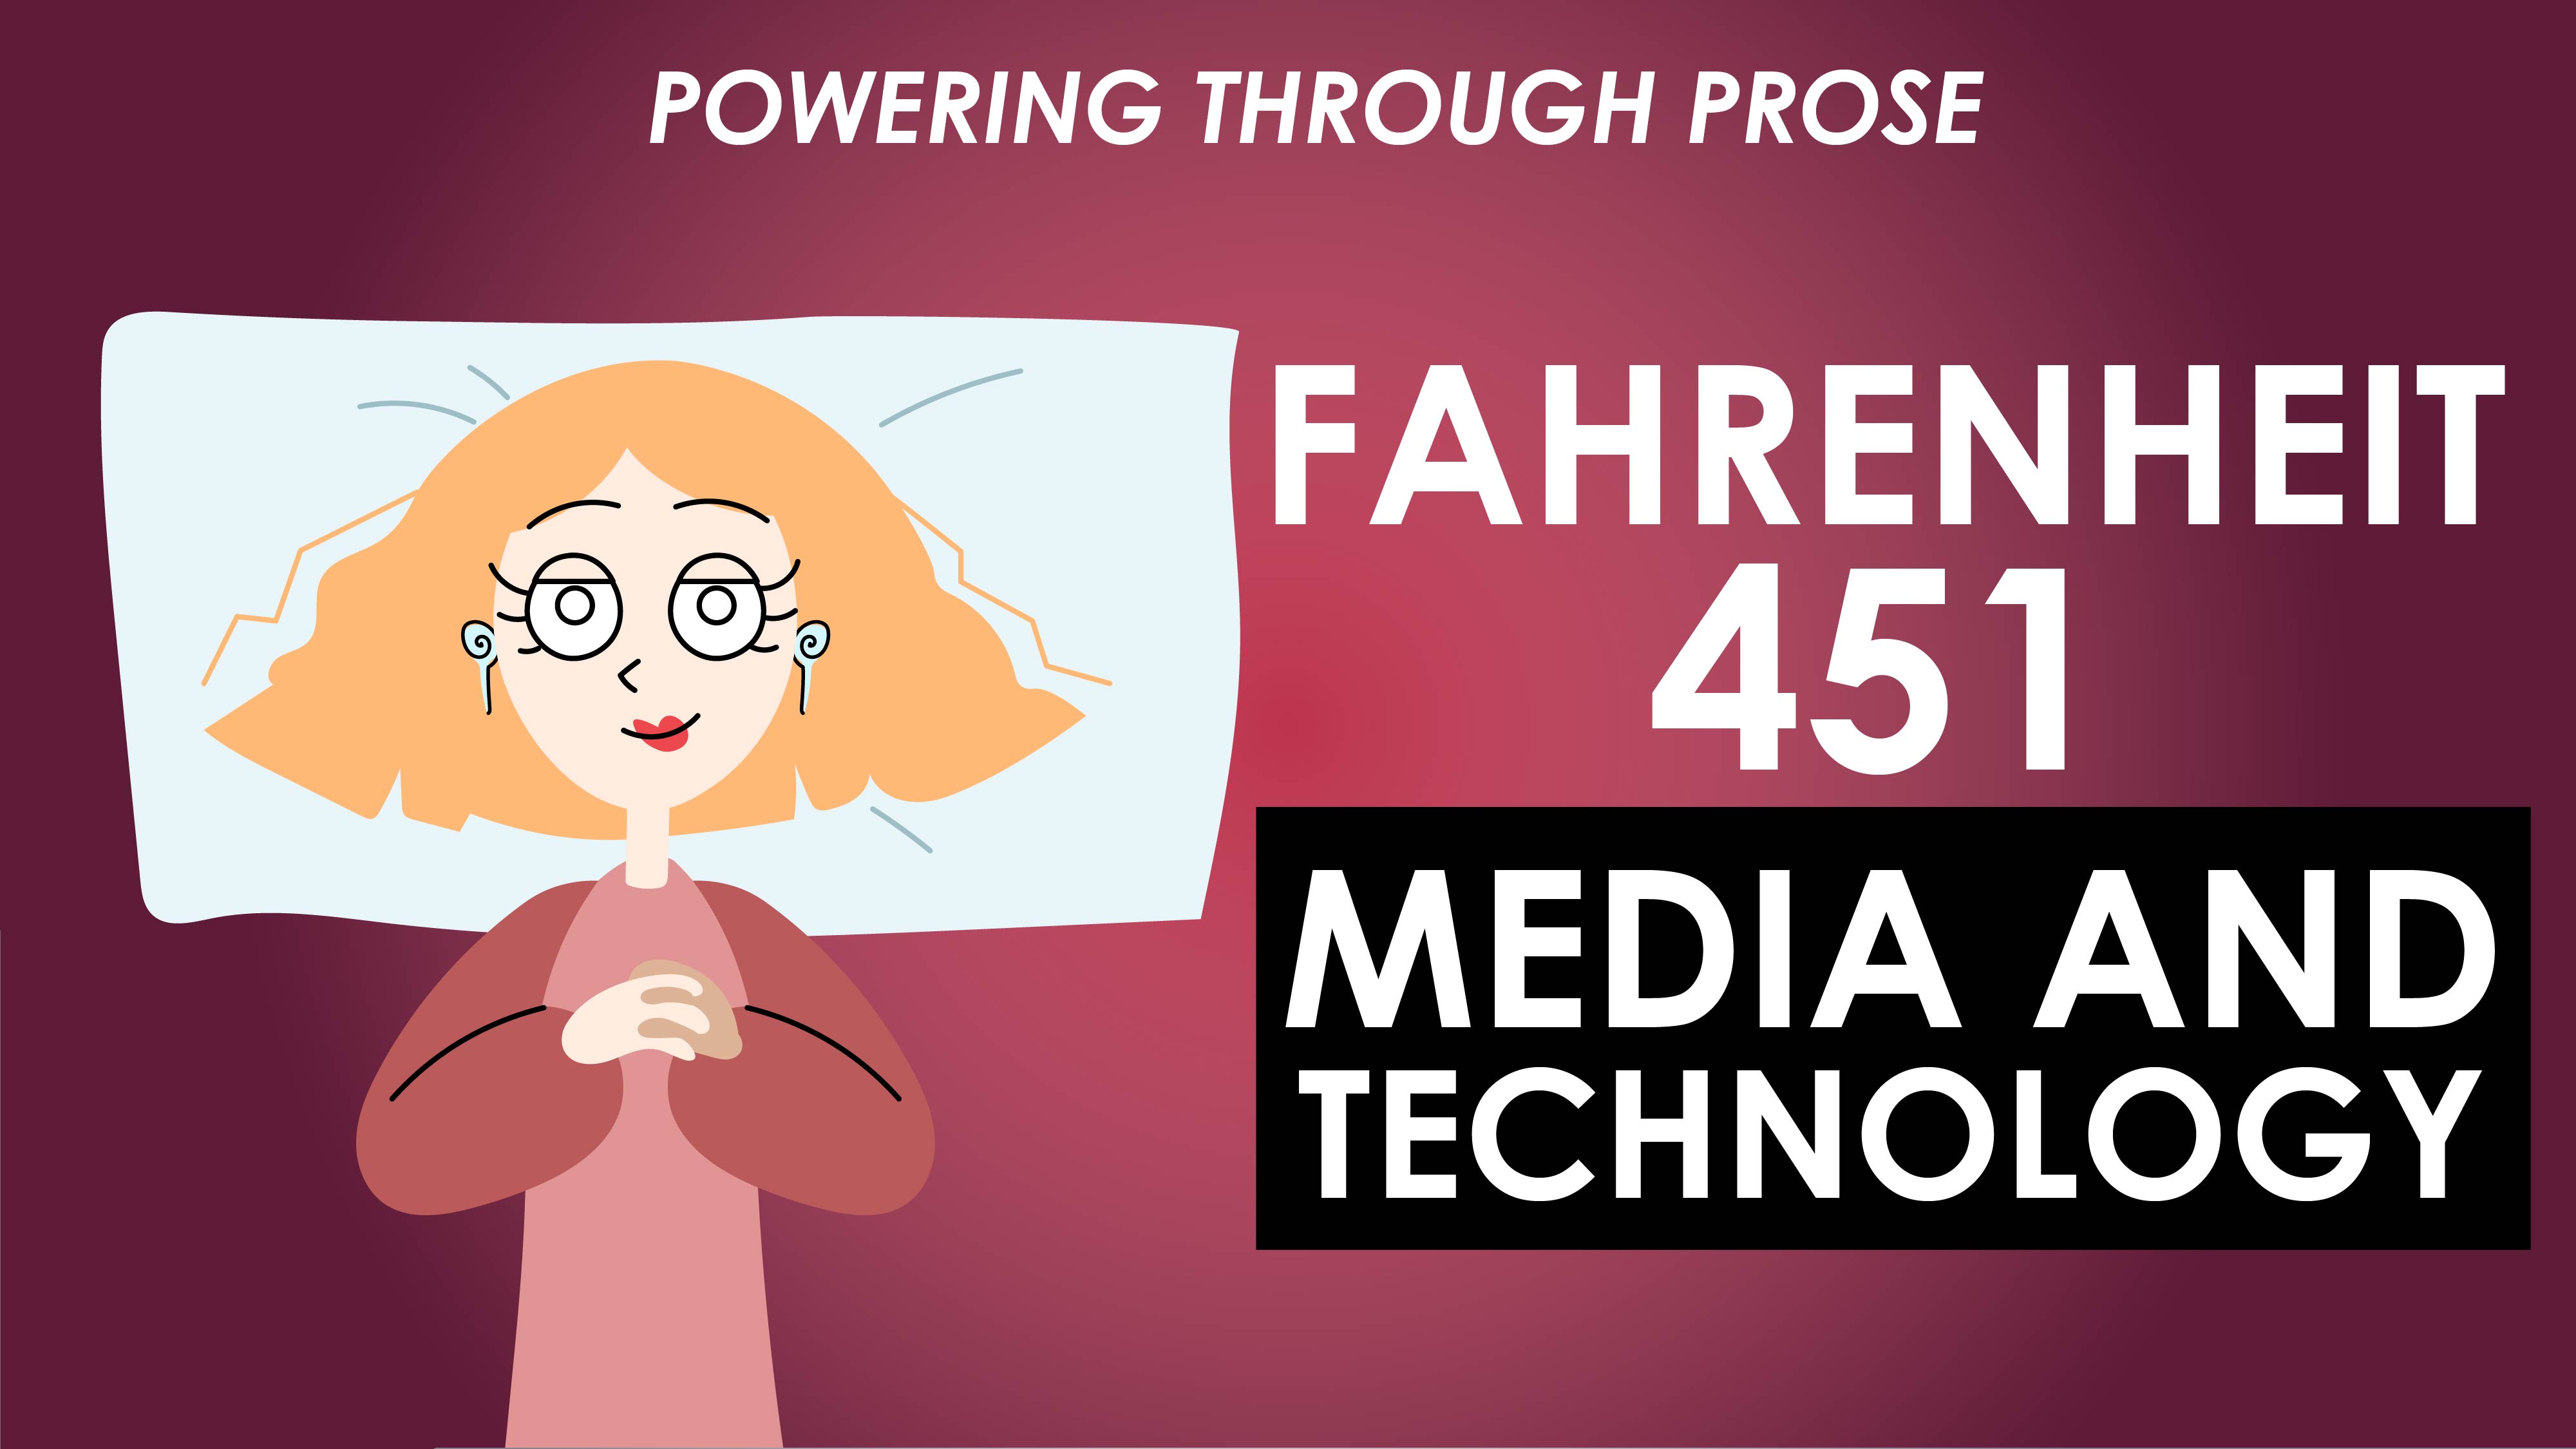 Fahrenheit 451 - Ray Bradbury - Media and Technology - Powering Through Prose Series